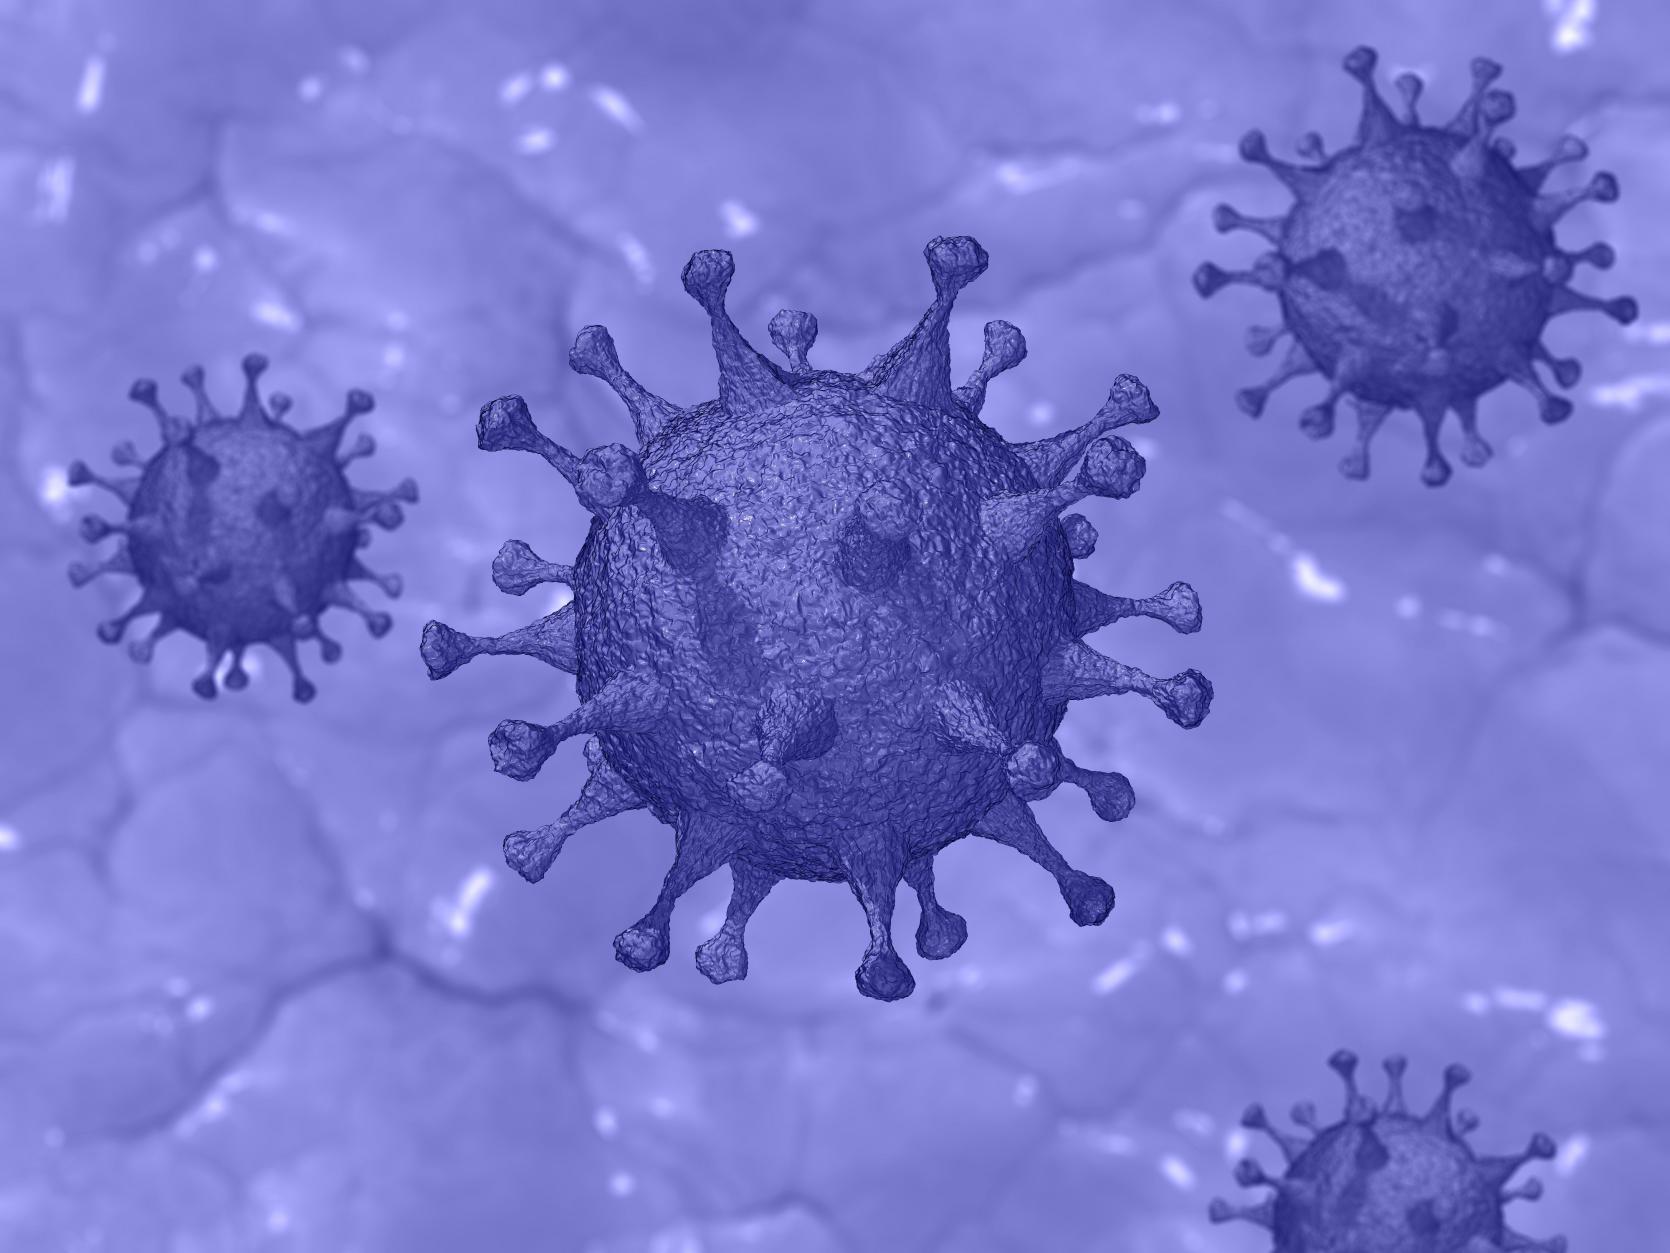 A graphic depicting a coronavirus